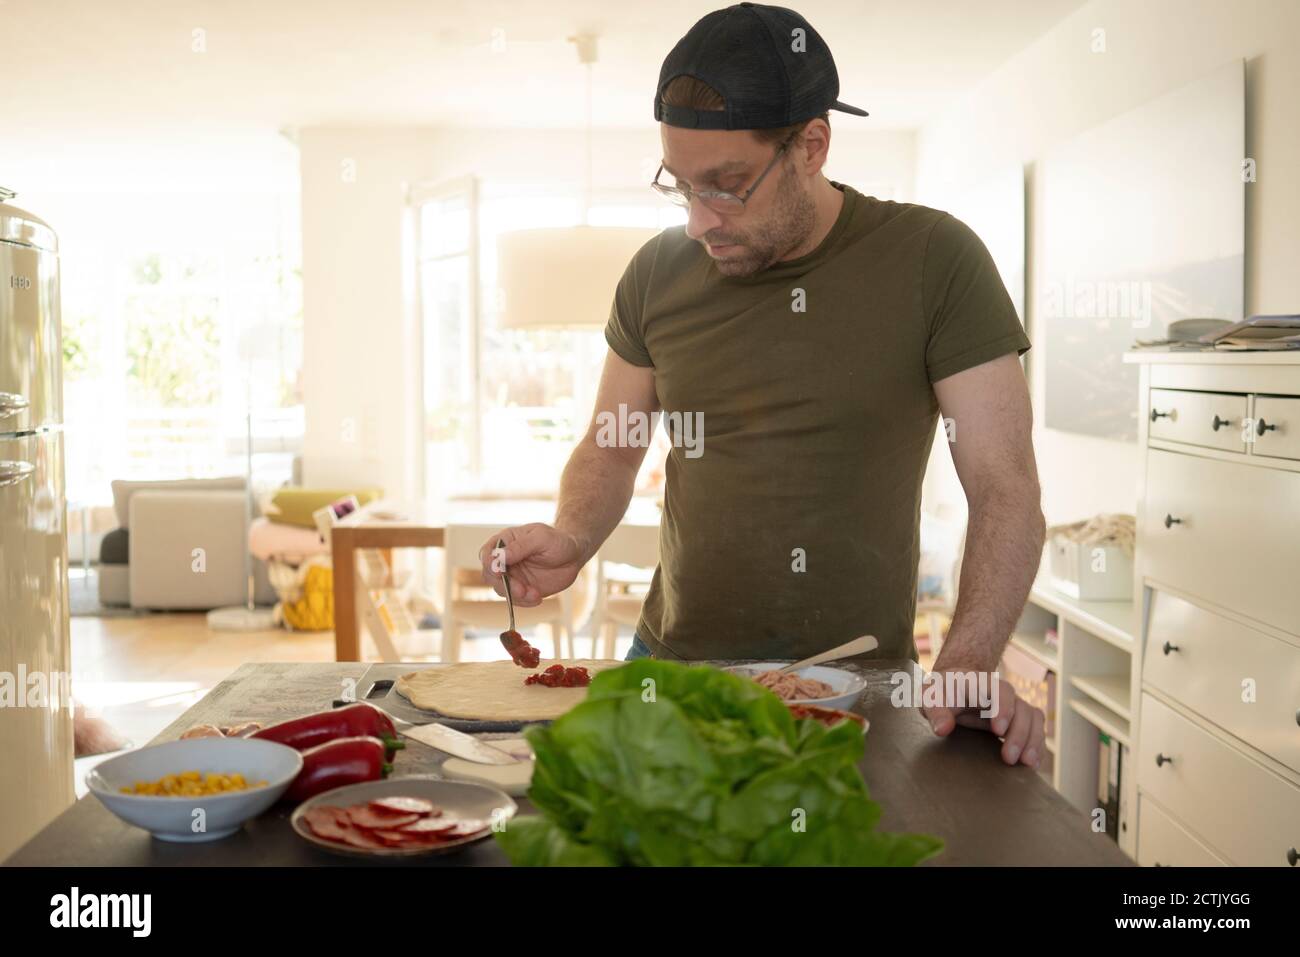 Man preparing pizza over kitchen island Stock Photo